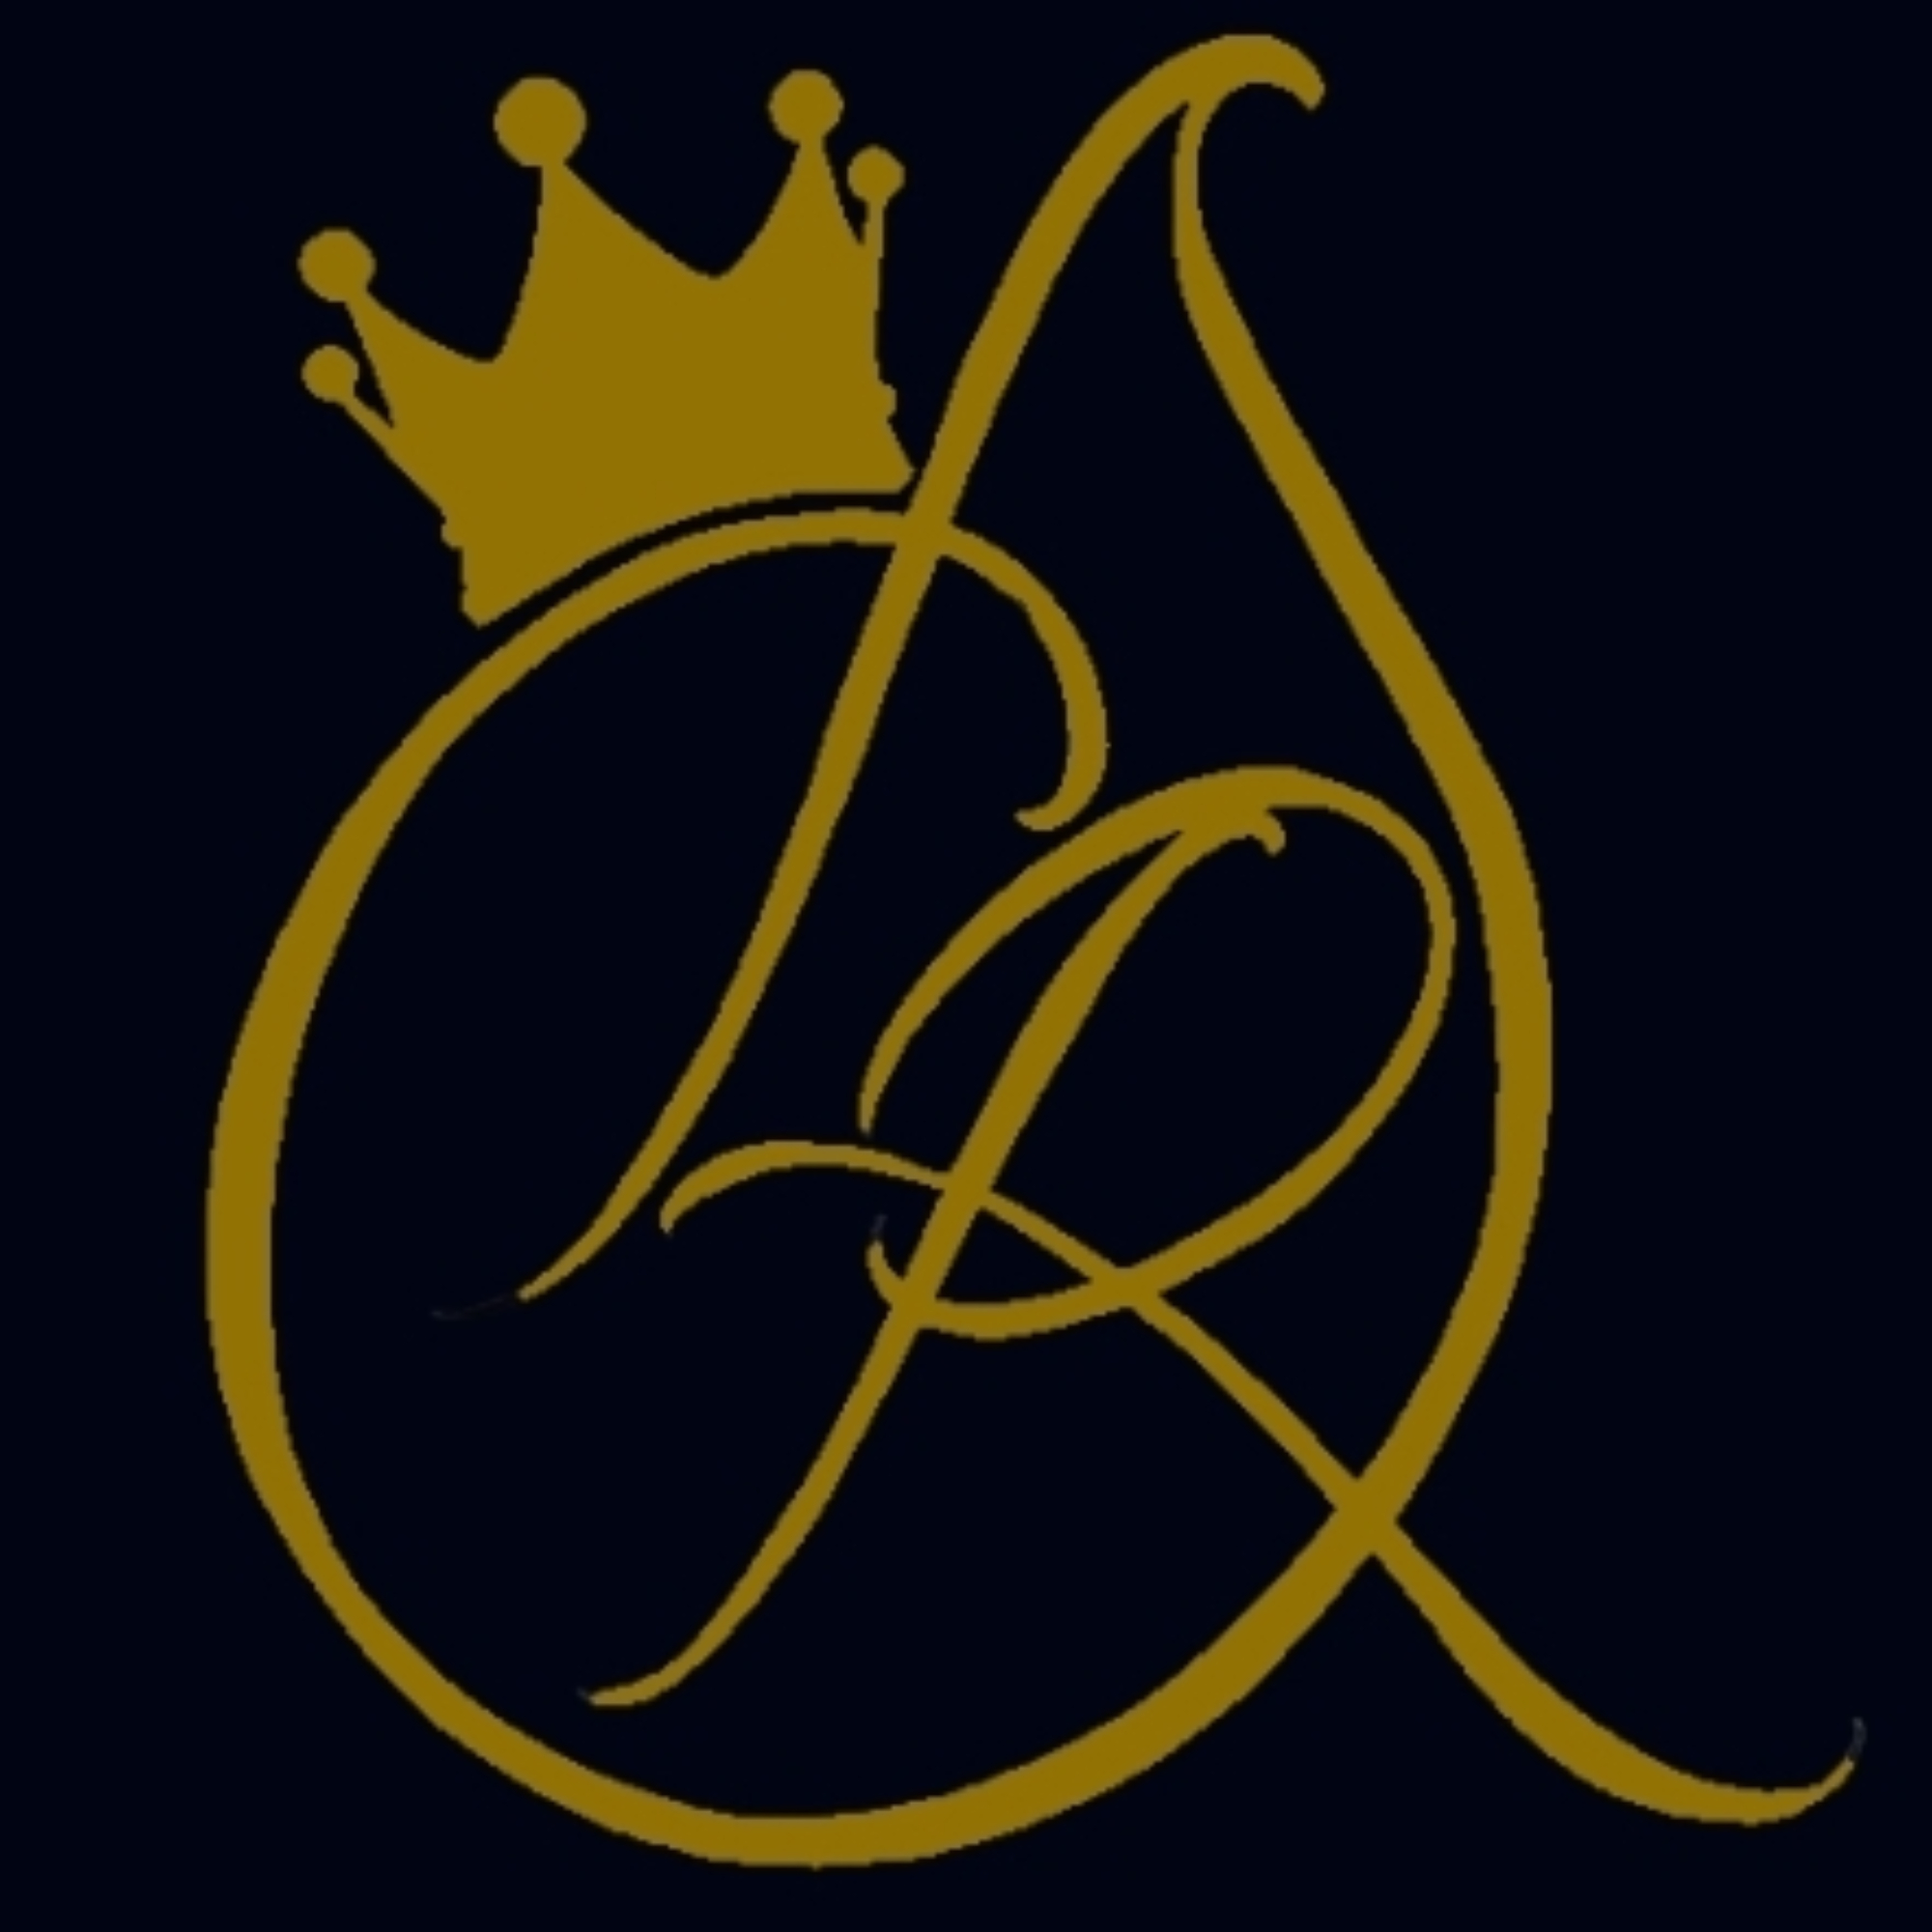 Organization logo for Signet Royalty